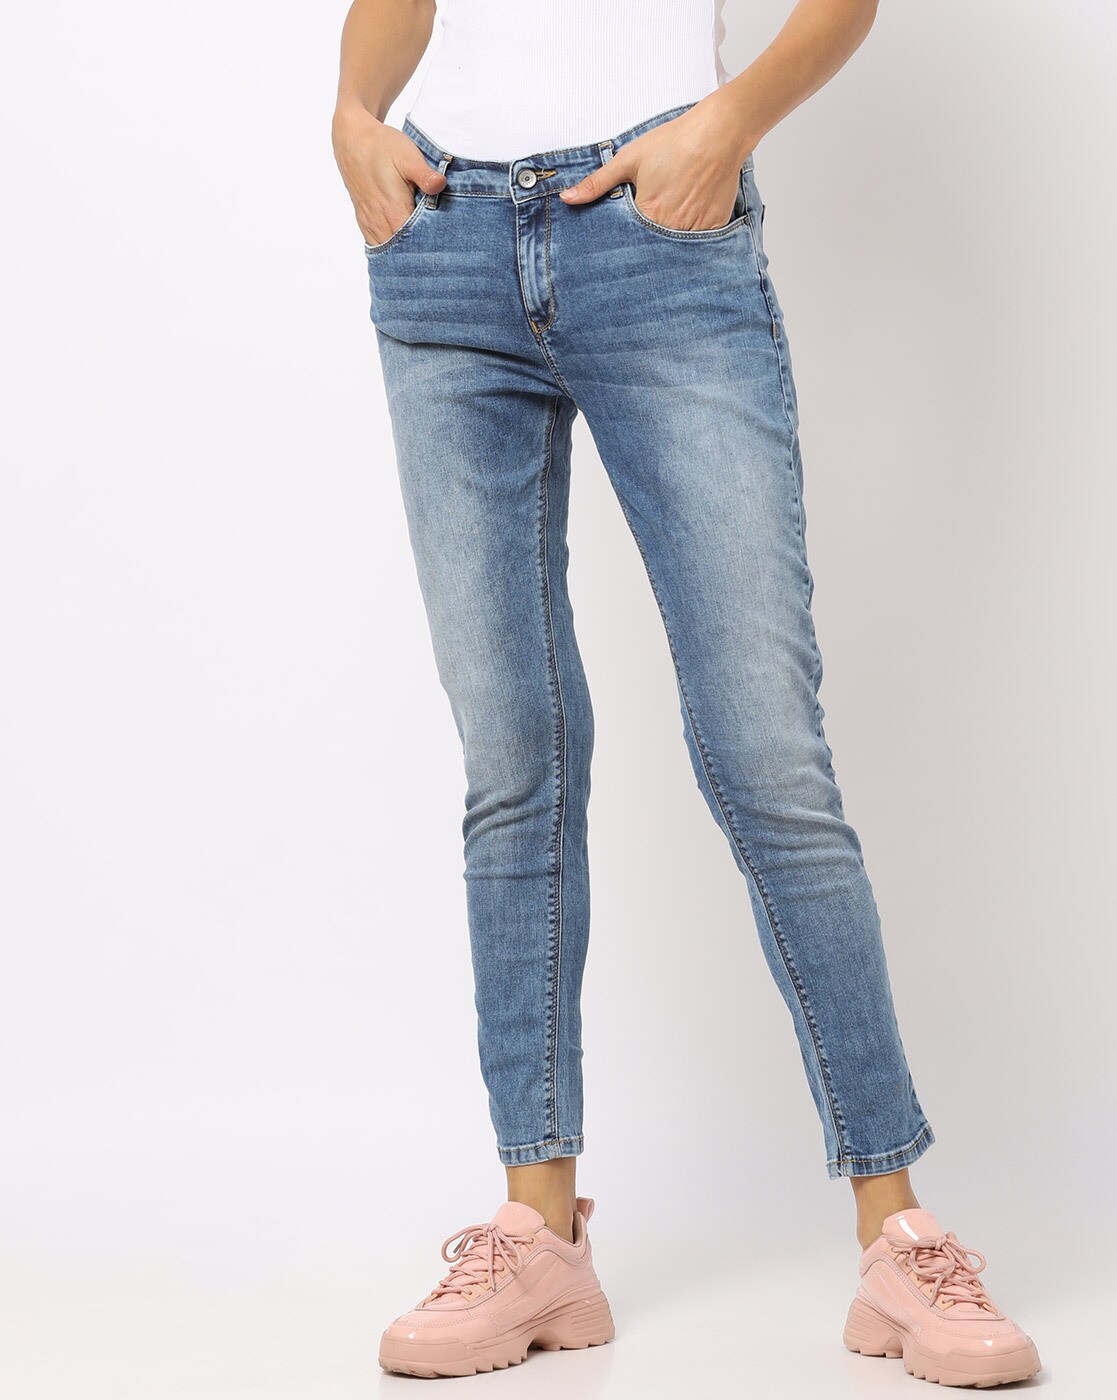 spykar jeans for ladies